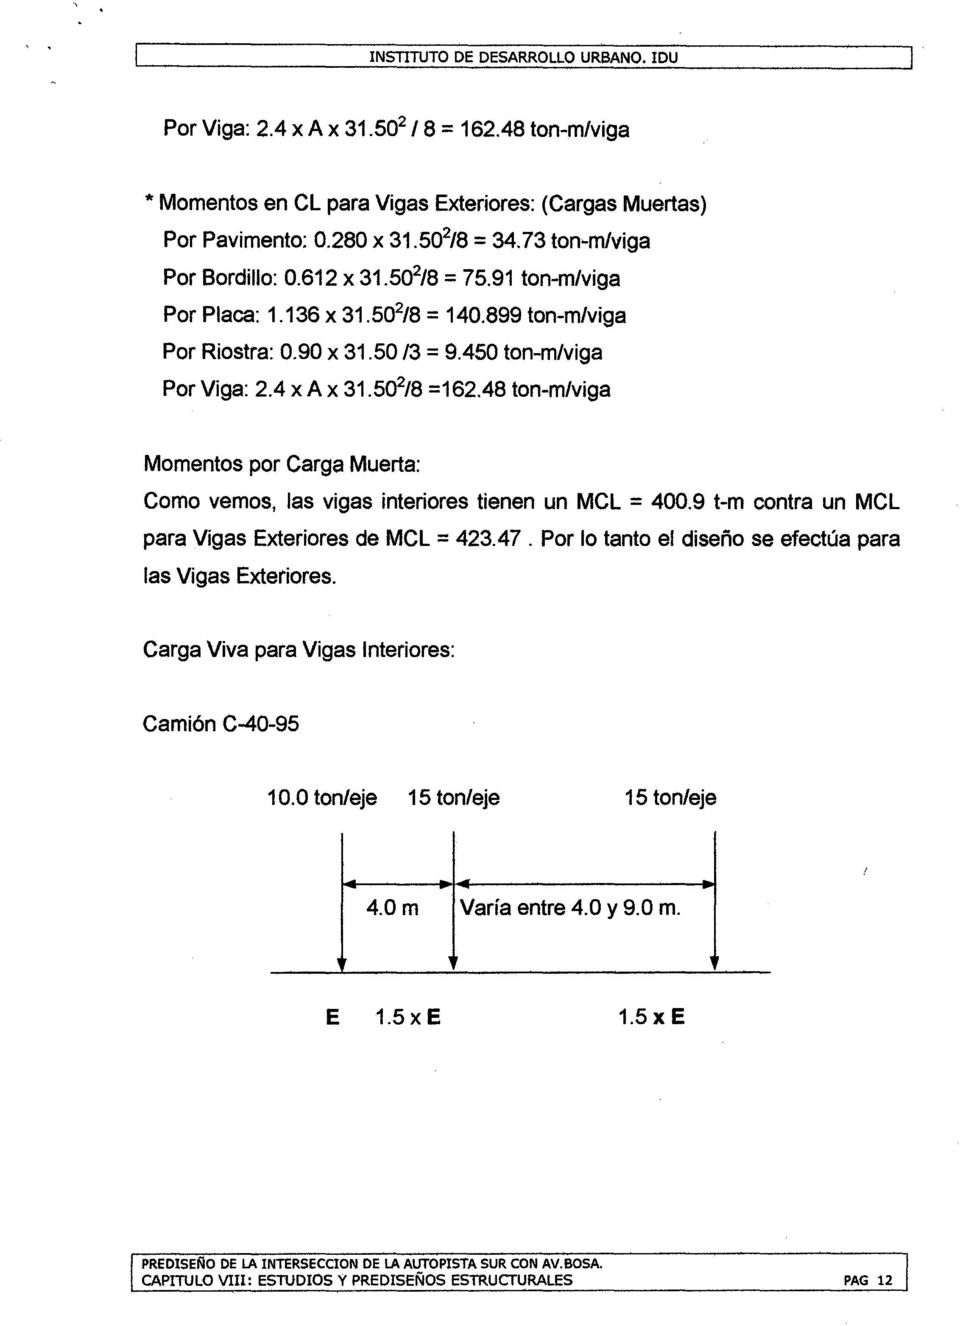 50 2 /8 =162.48 ton-m/viga Momentos por Carga Muerta: Como vemos, las vigas interiores tienen un MCL = 400.9 t-m contra un MCL para Vigas Exteriores de MCL = 423.47.